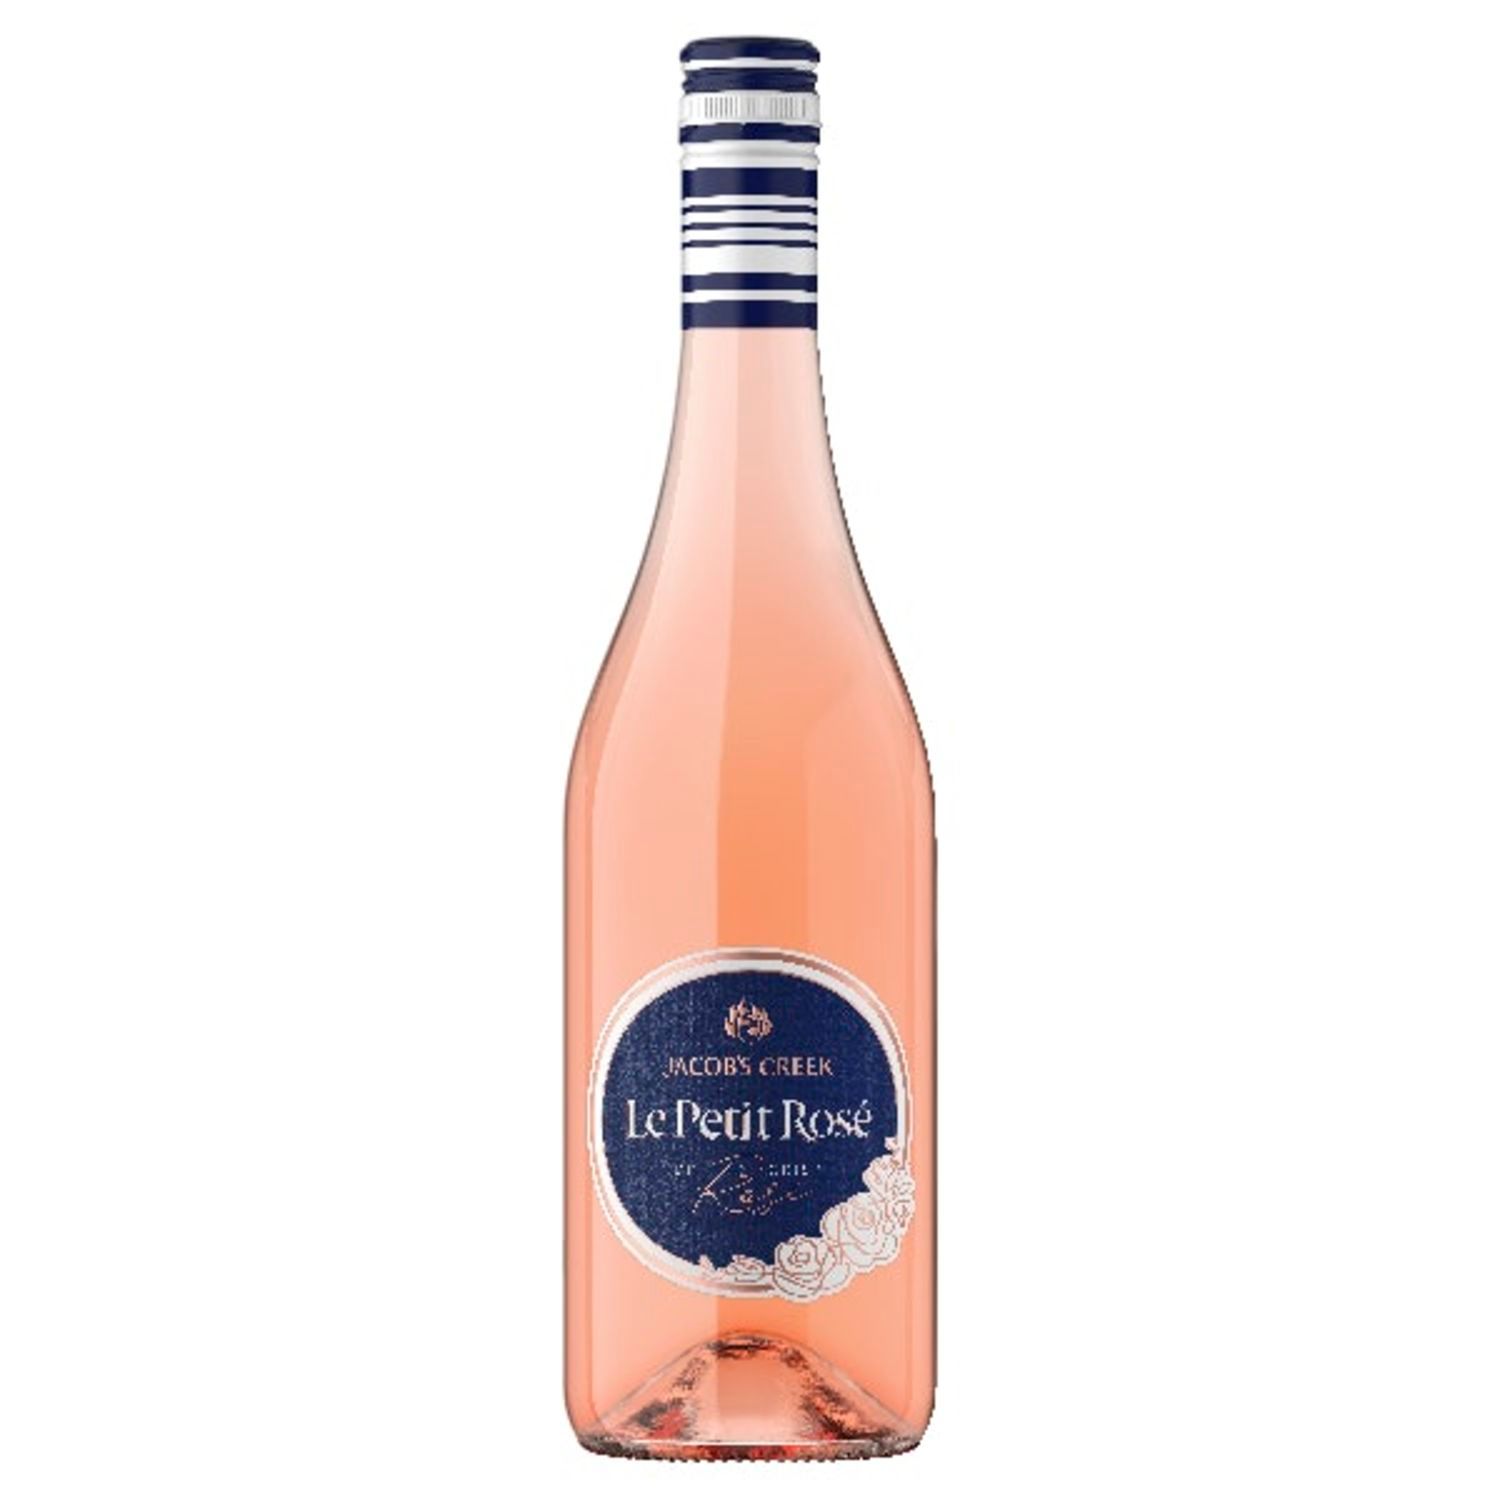 Jacob's Creek Le Petit Rose 750mL Bottle